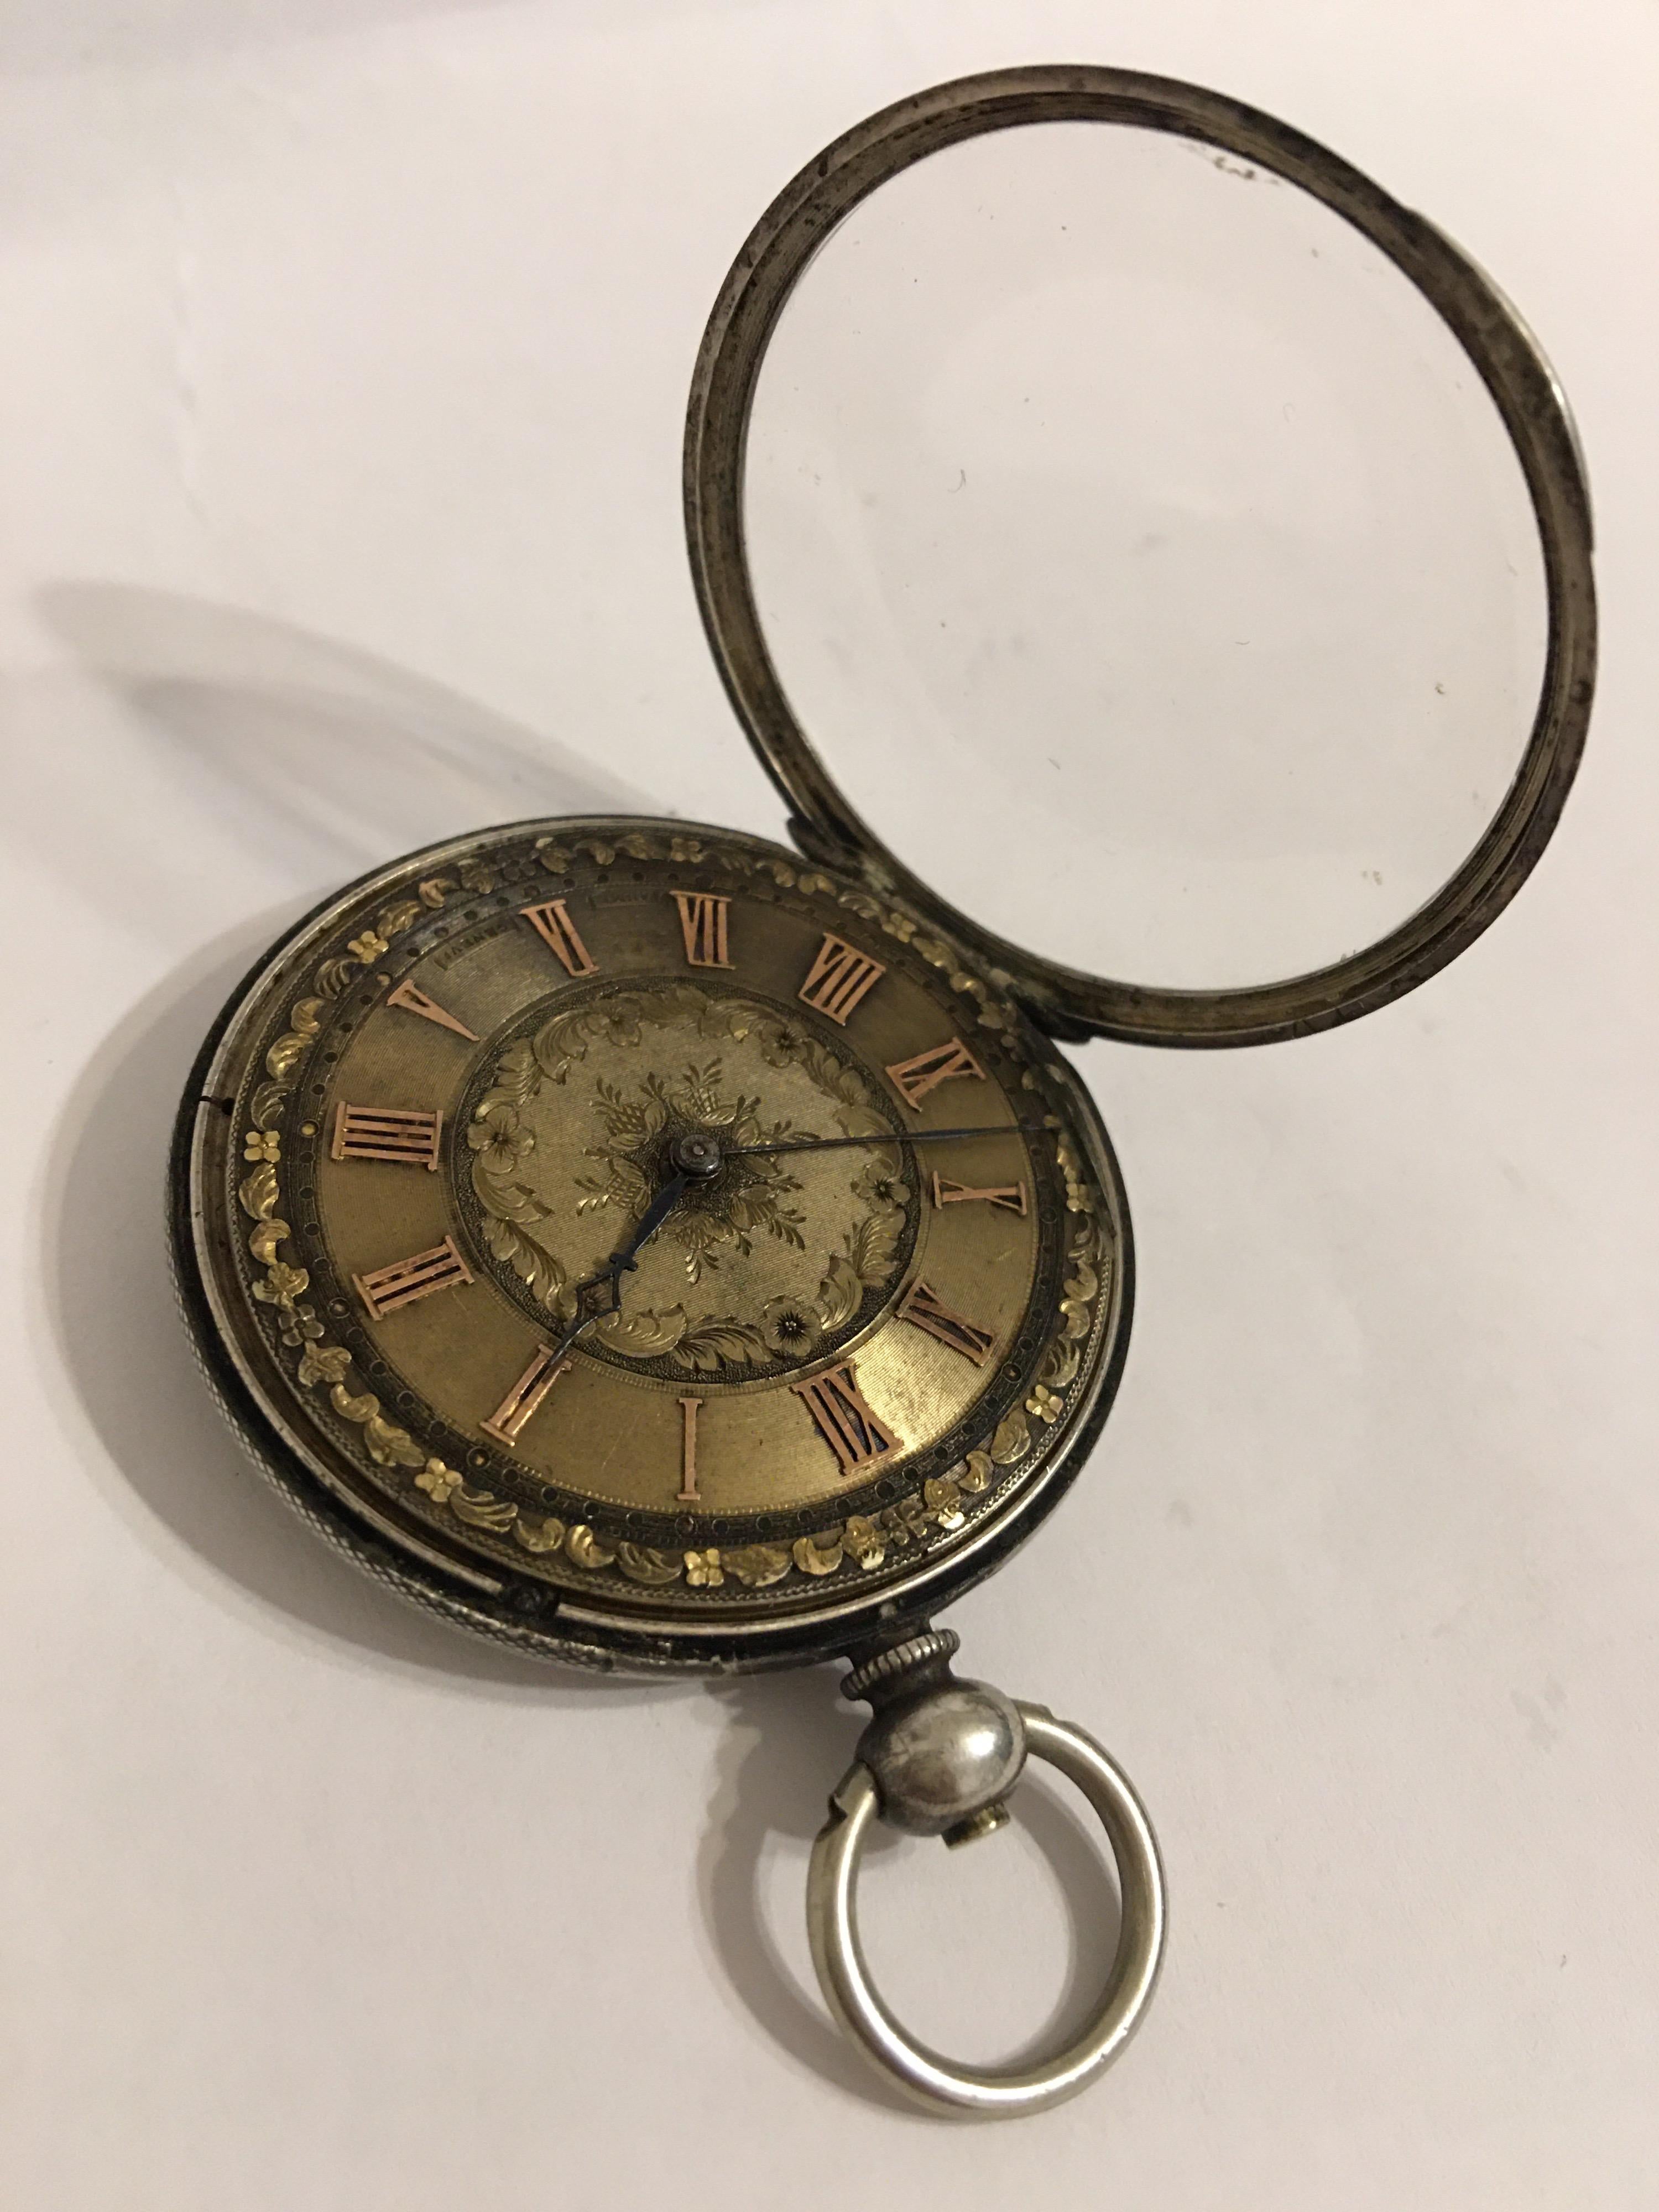 Antique Silver Key-Wind Baume Geneve Pocket Watch 1